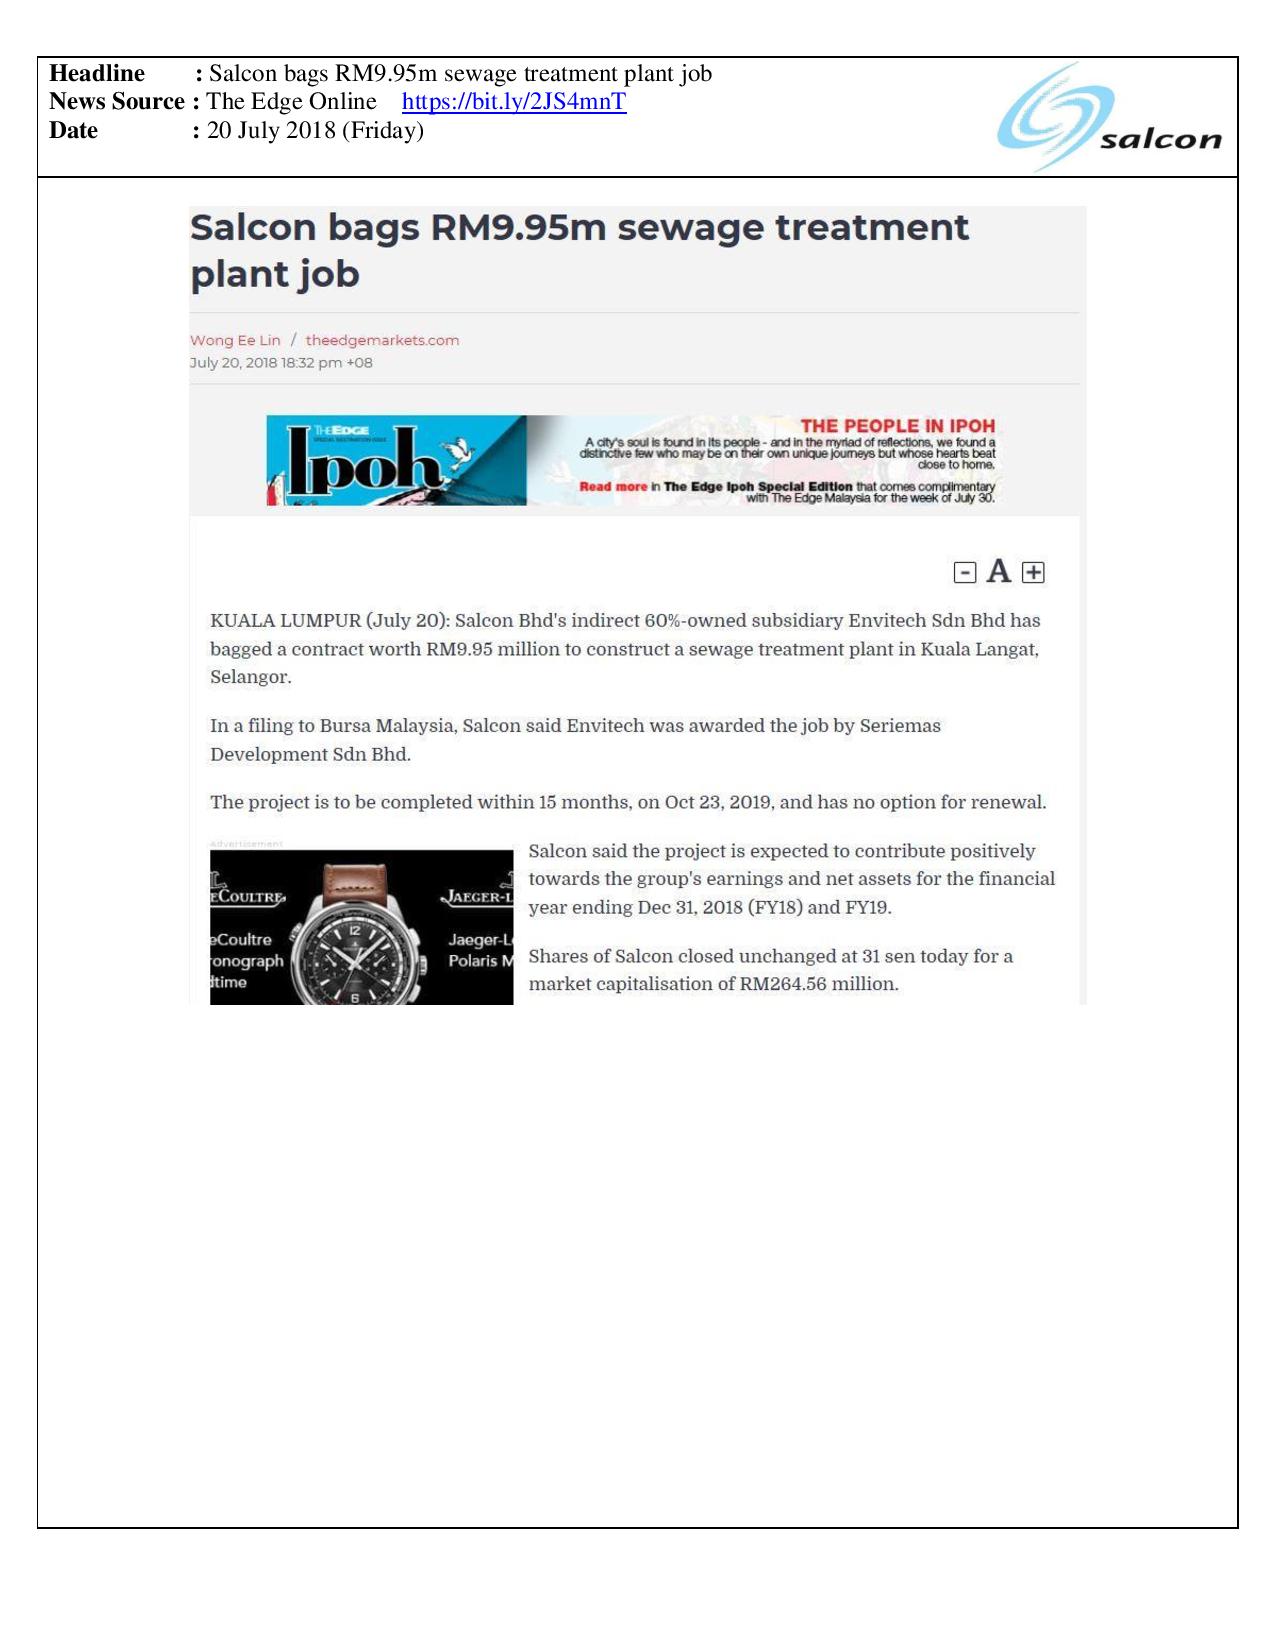 Salcon bags RM9.95m sewage treatment plant job